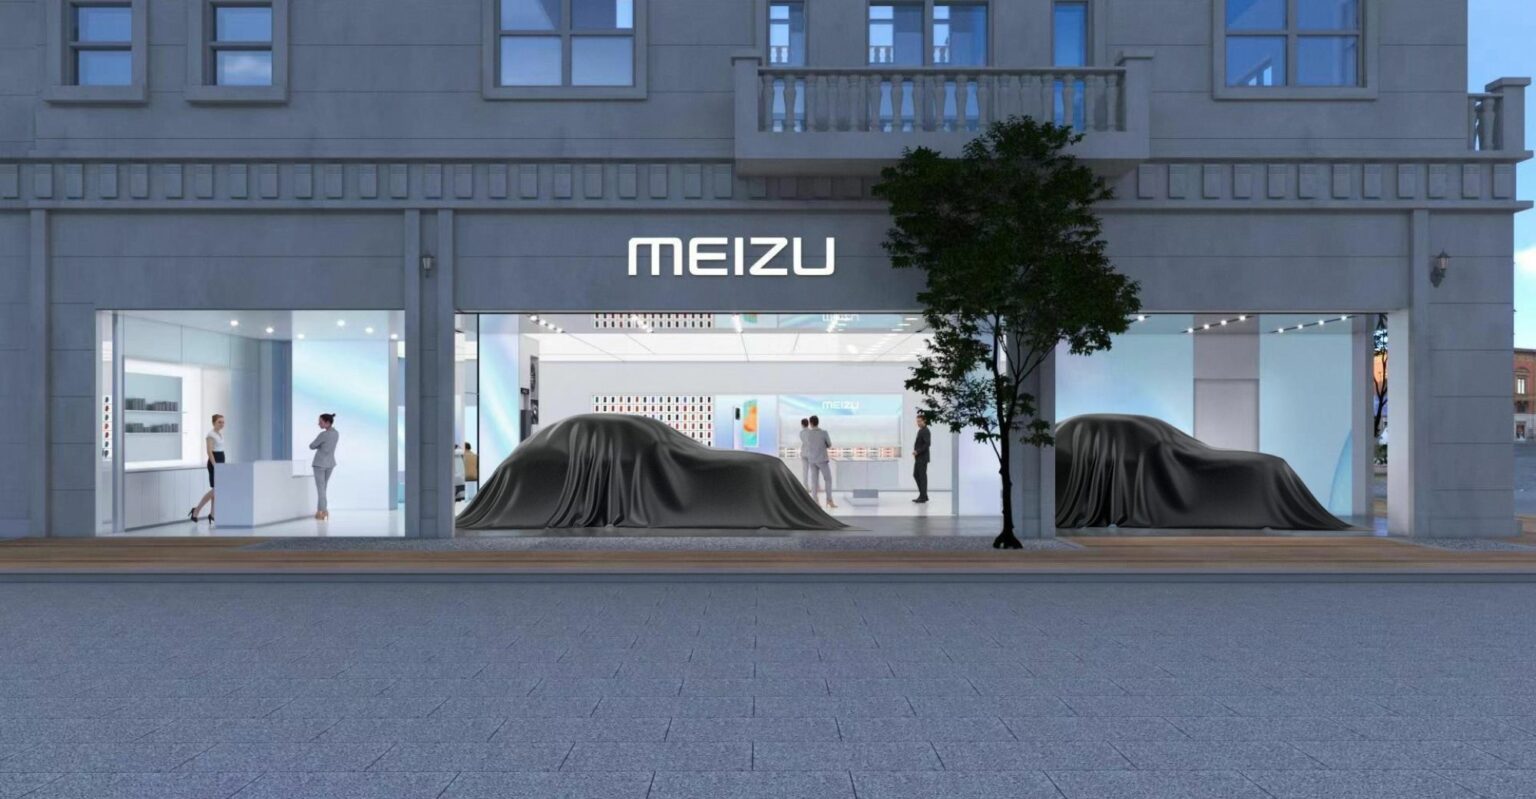 Meizu company